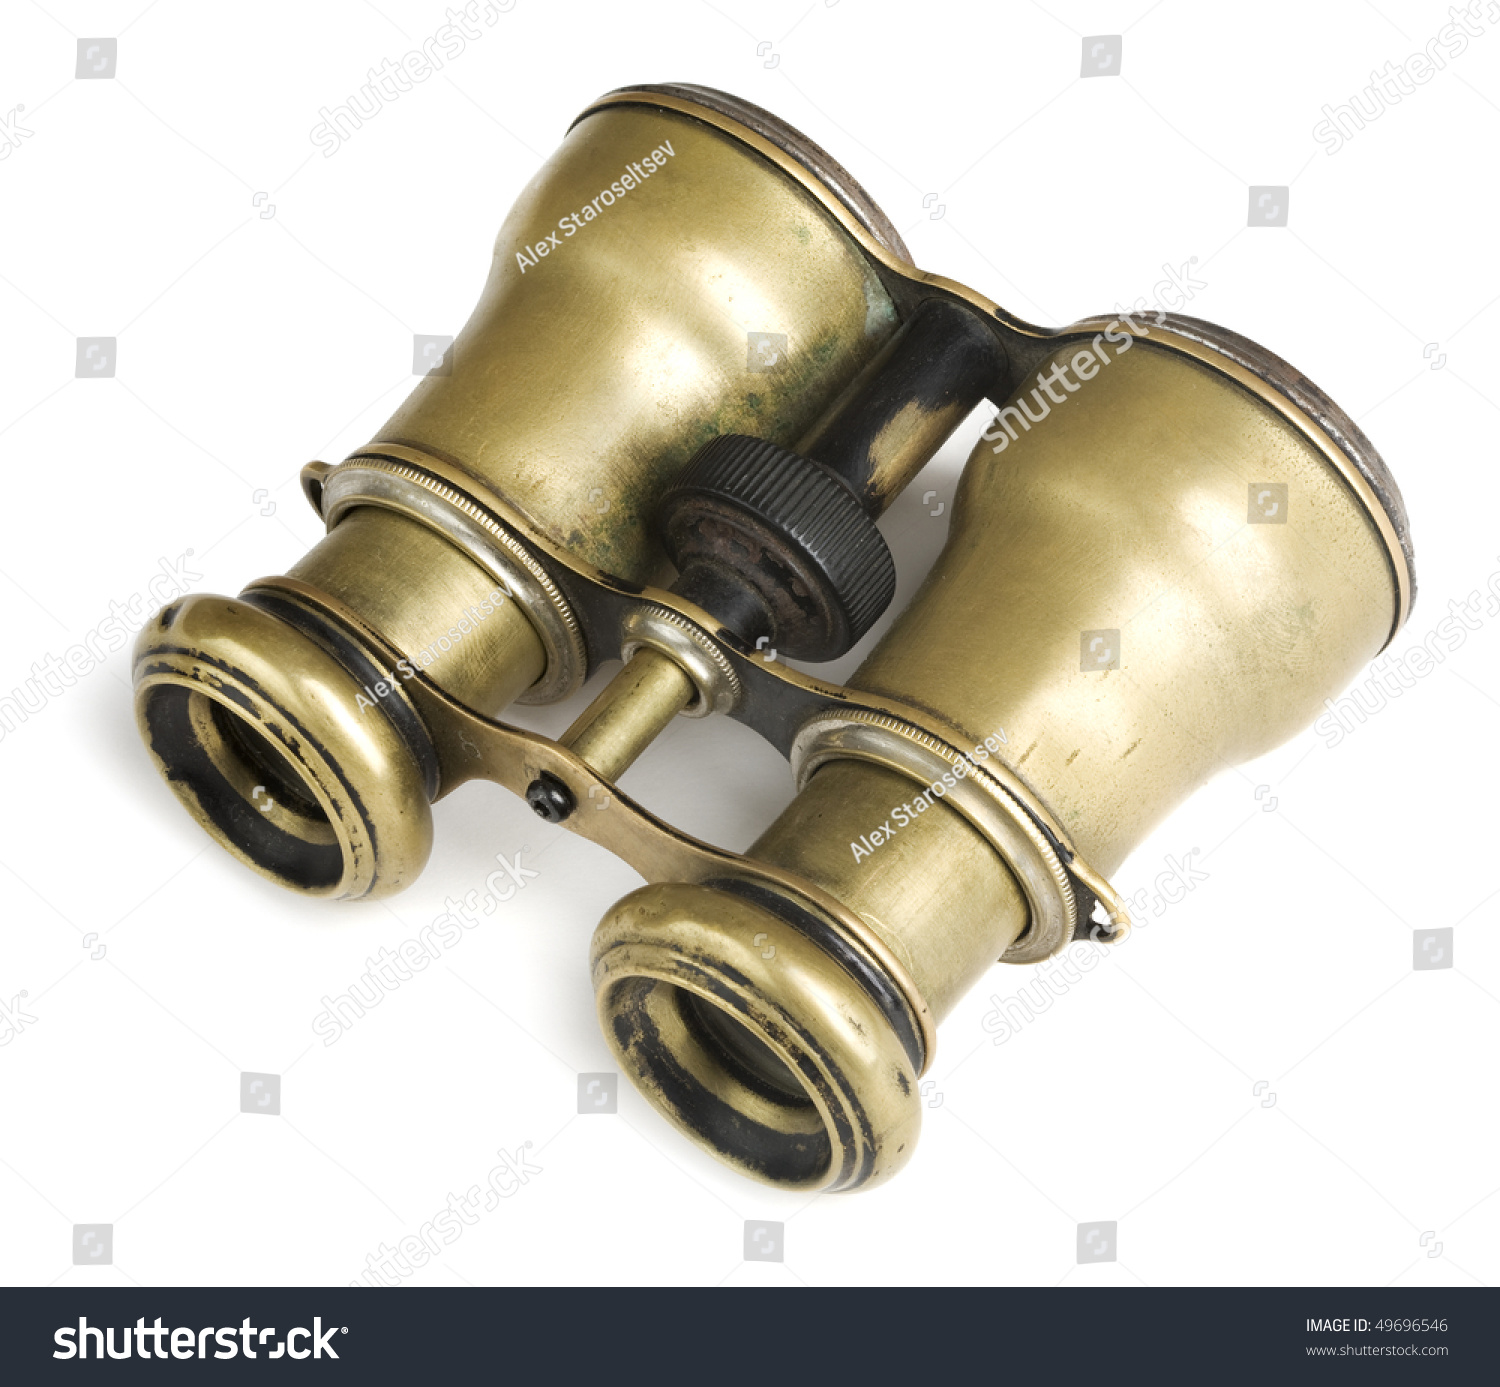 Old Binoculars On White Background Stock Photo 49696546 - Shutterstock